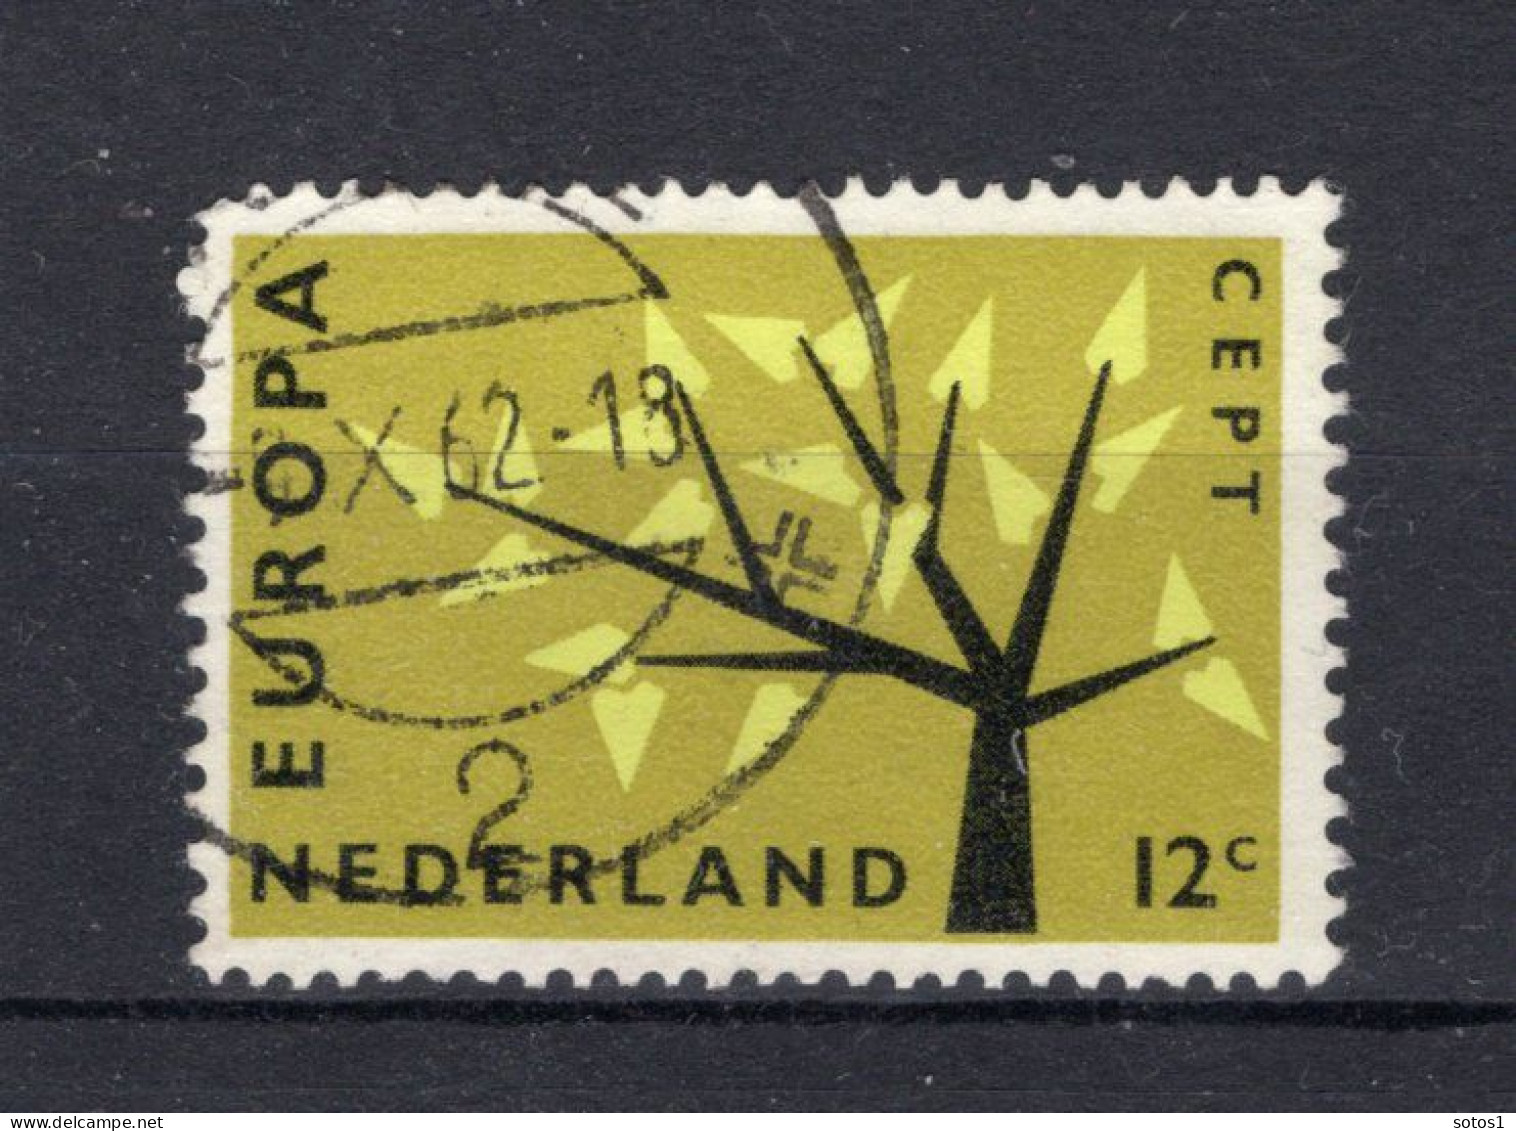 (B) Nederland CEPT 782° Gestempeld 1962 - 1962